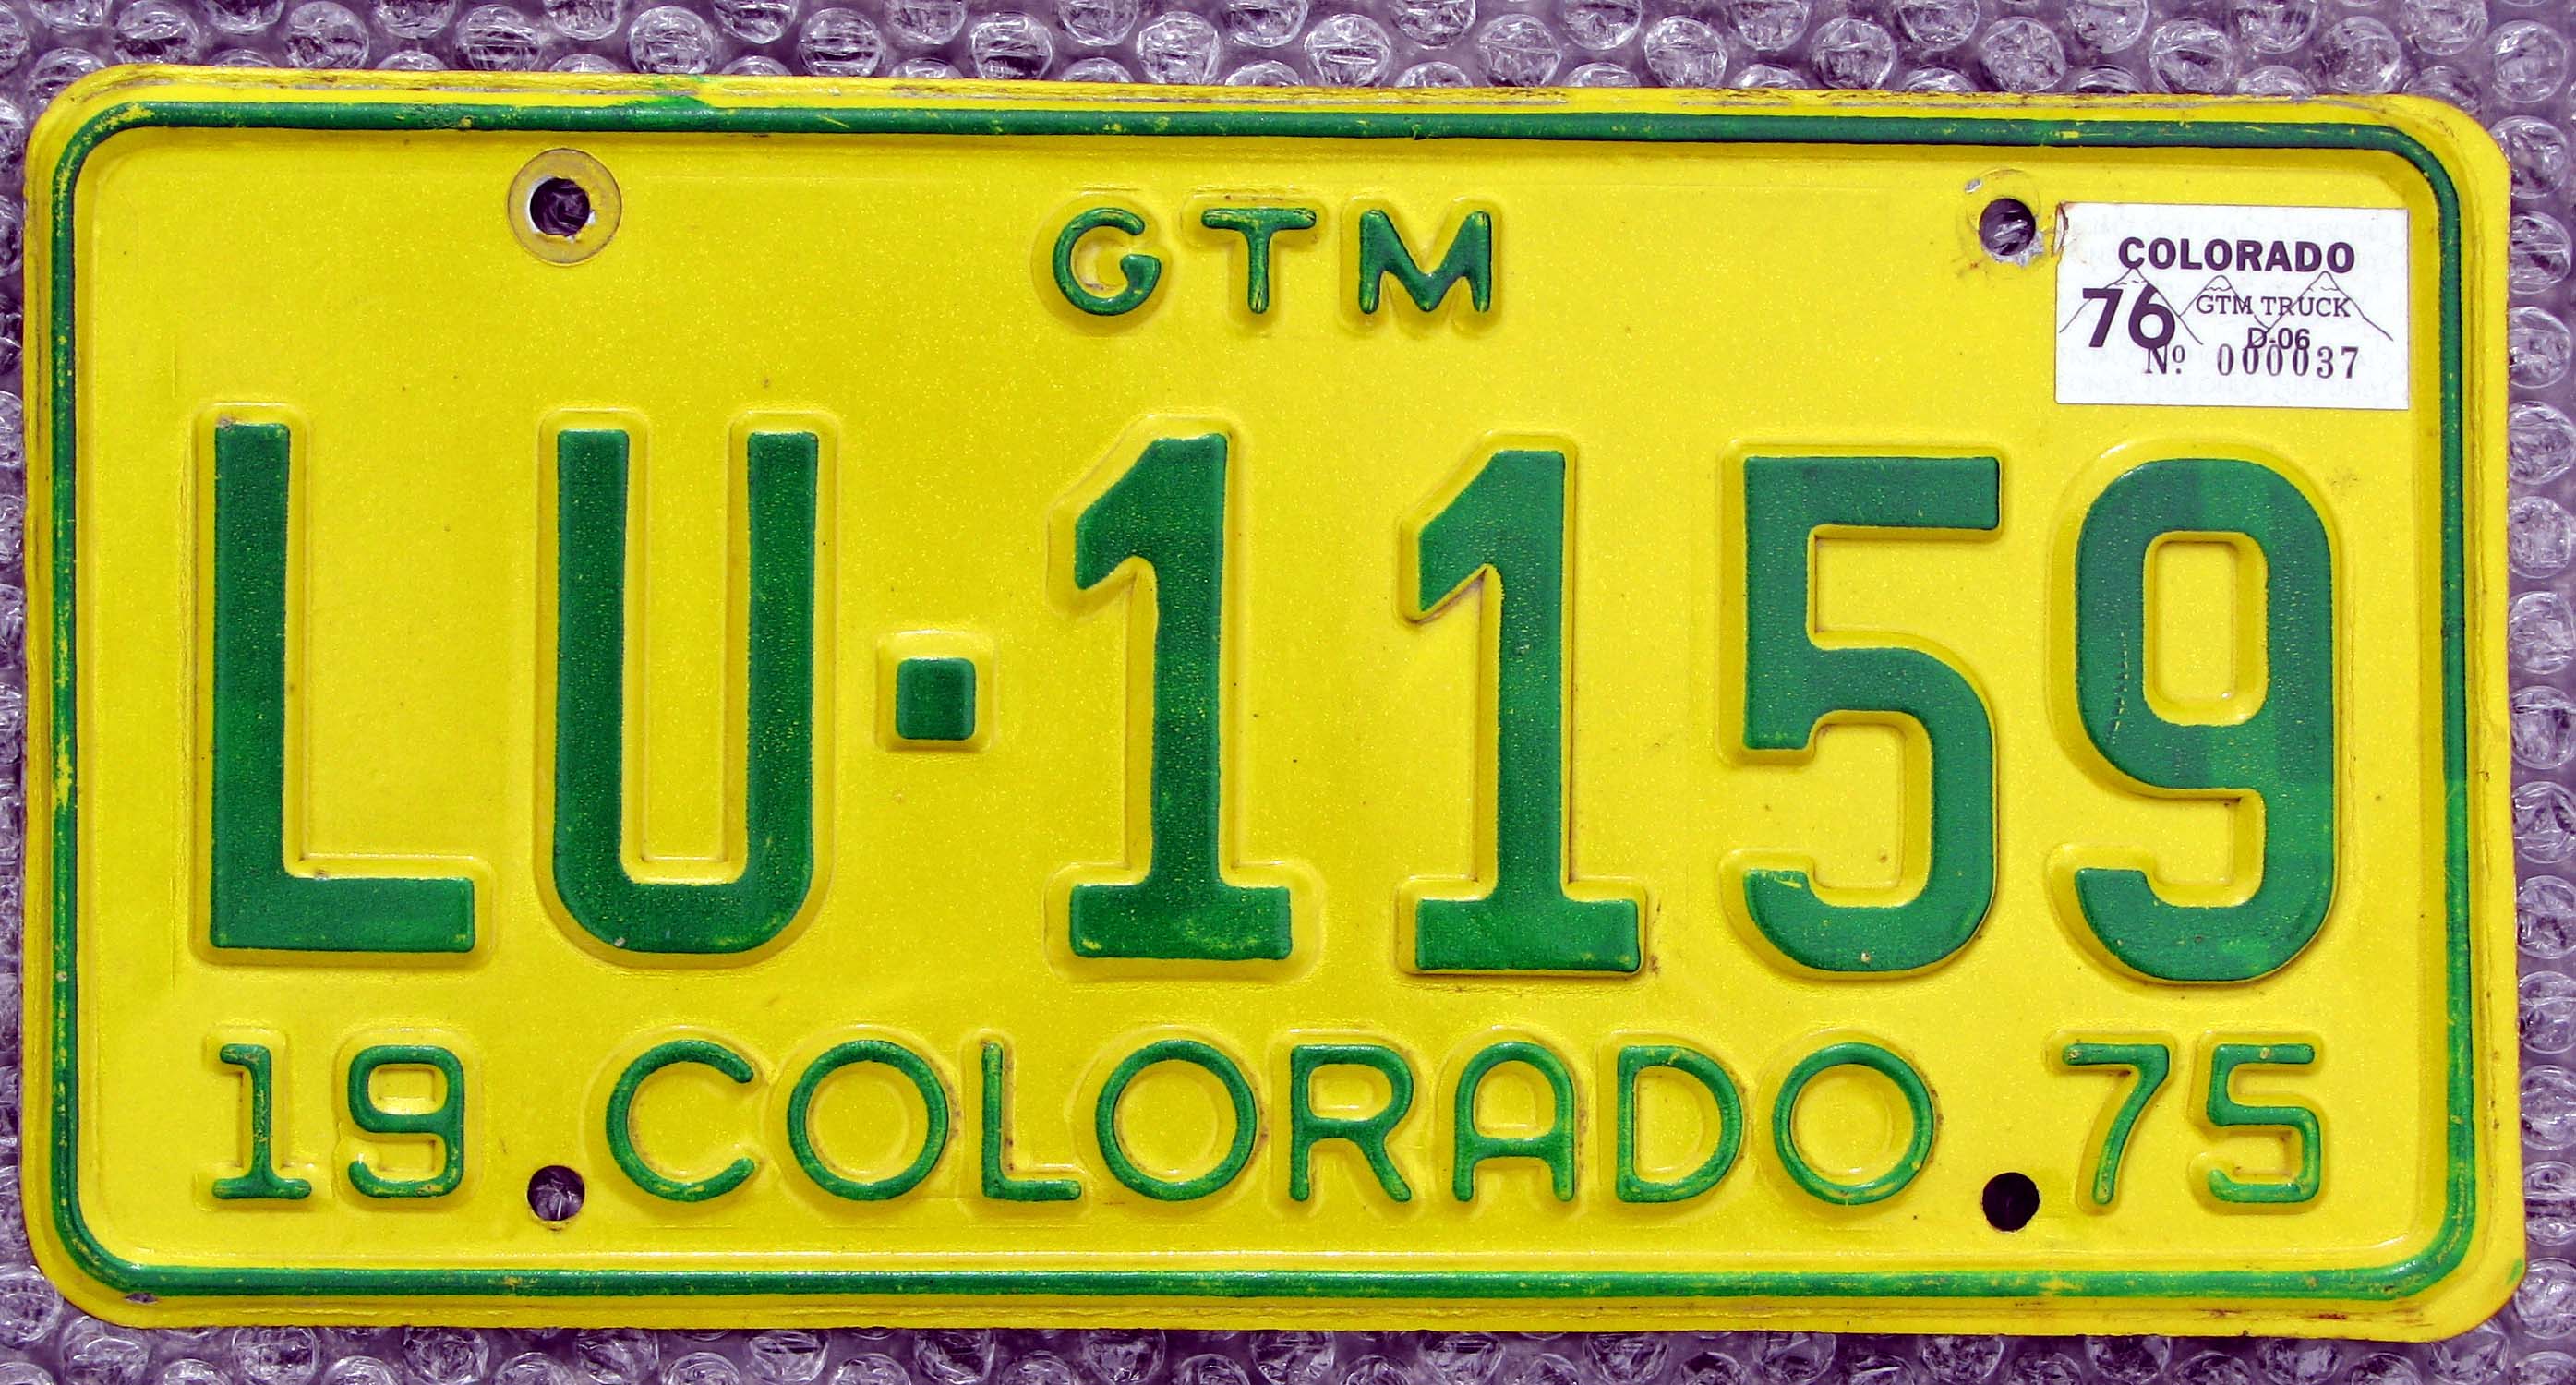 Colorado Truck Plate  Automobile License Plate Store: Collectible